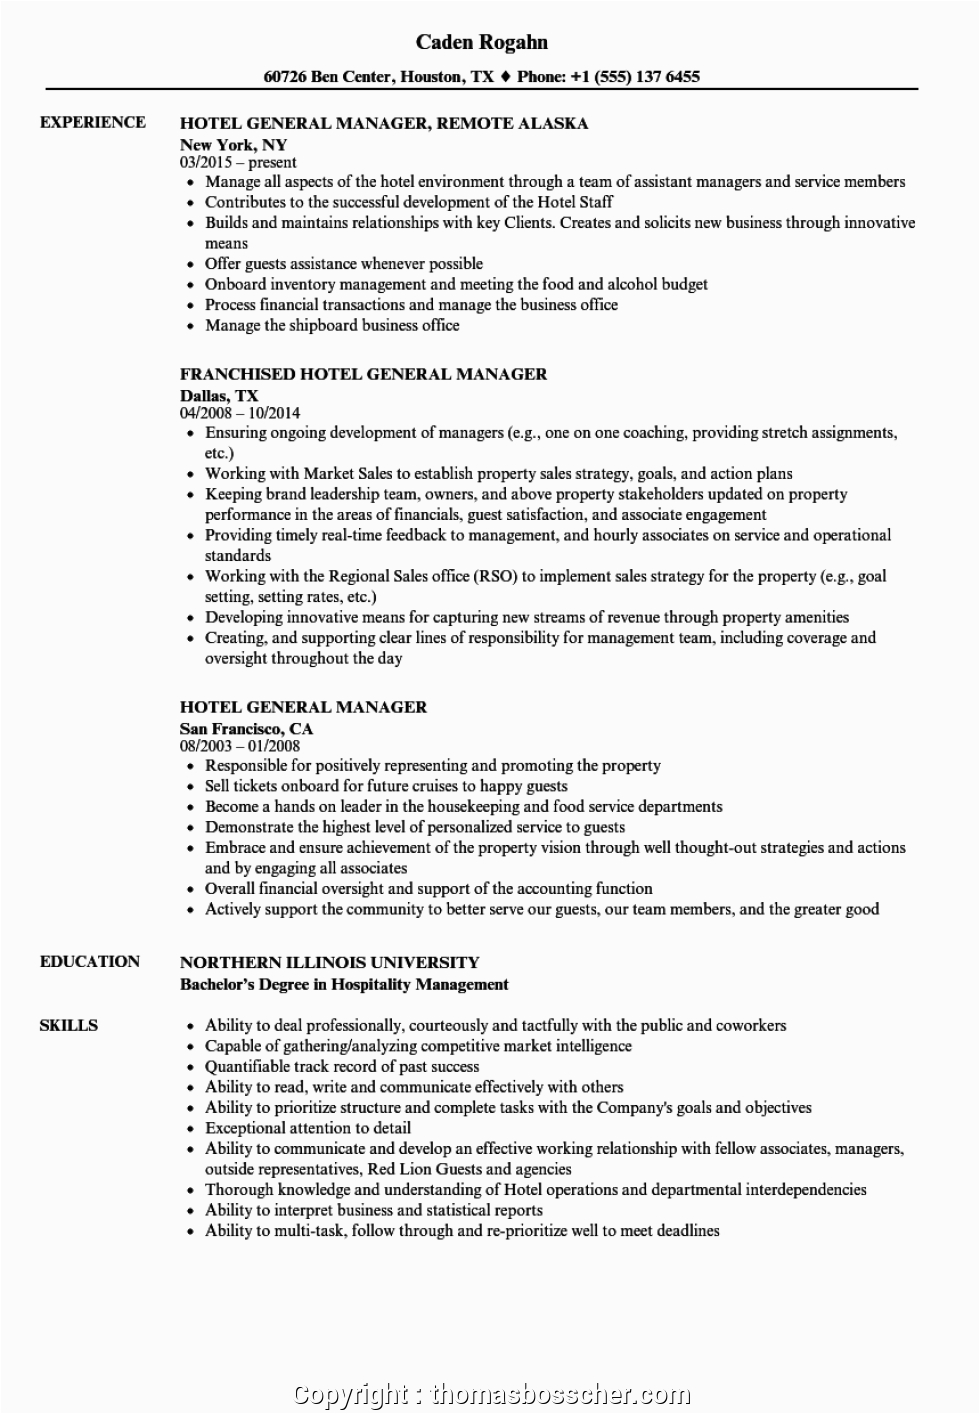 Sample Resume for Hotel Management Job Free Hotel Manager Cv Doc General Manager Resume Resumes